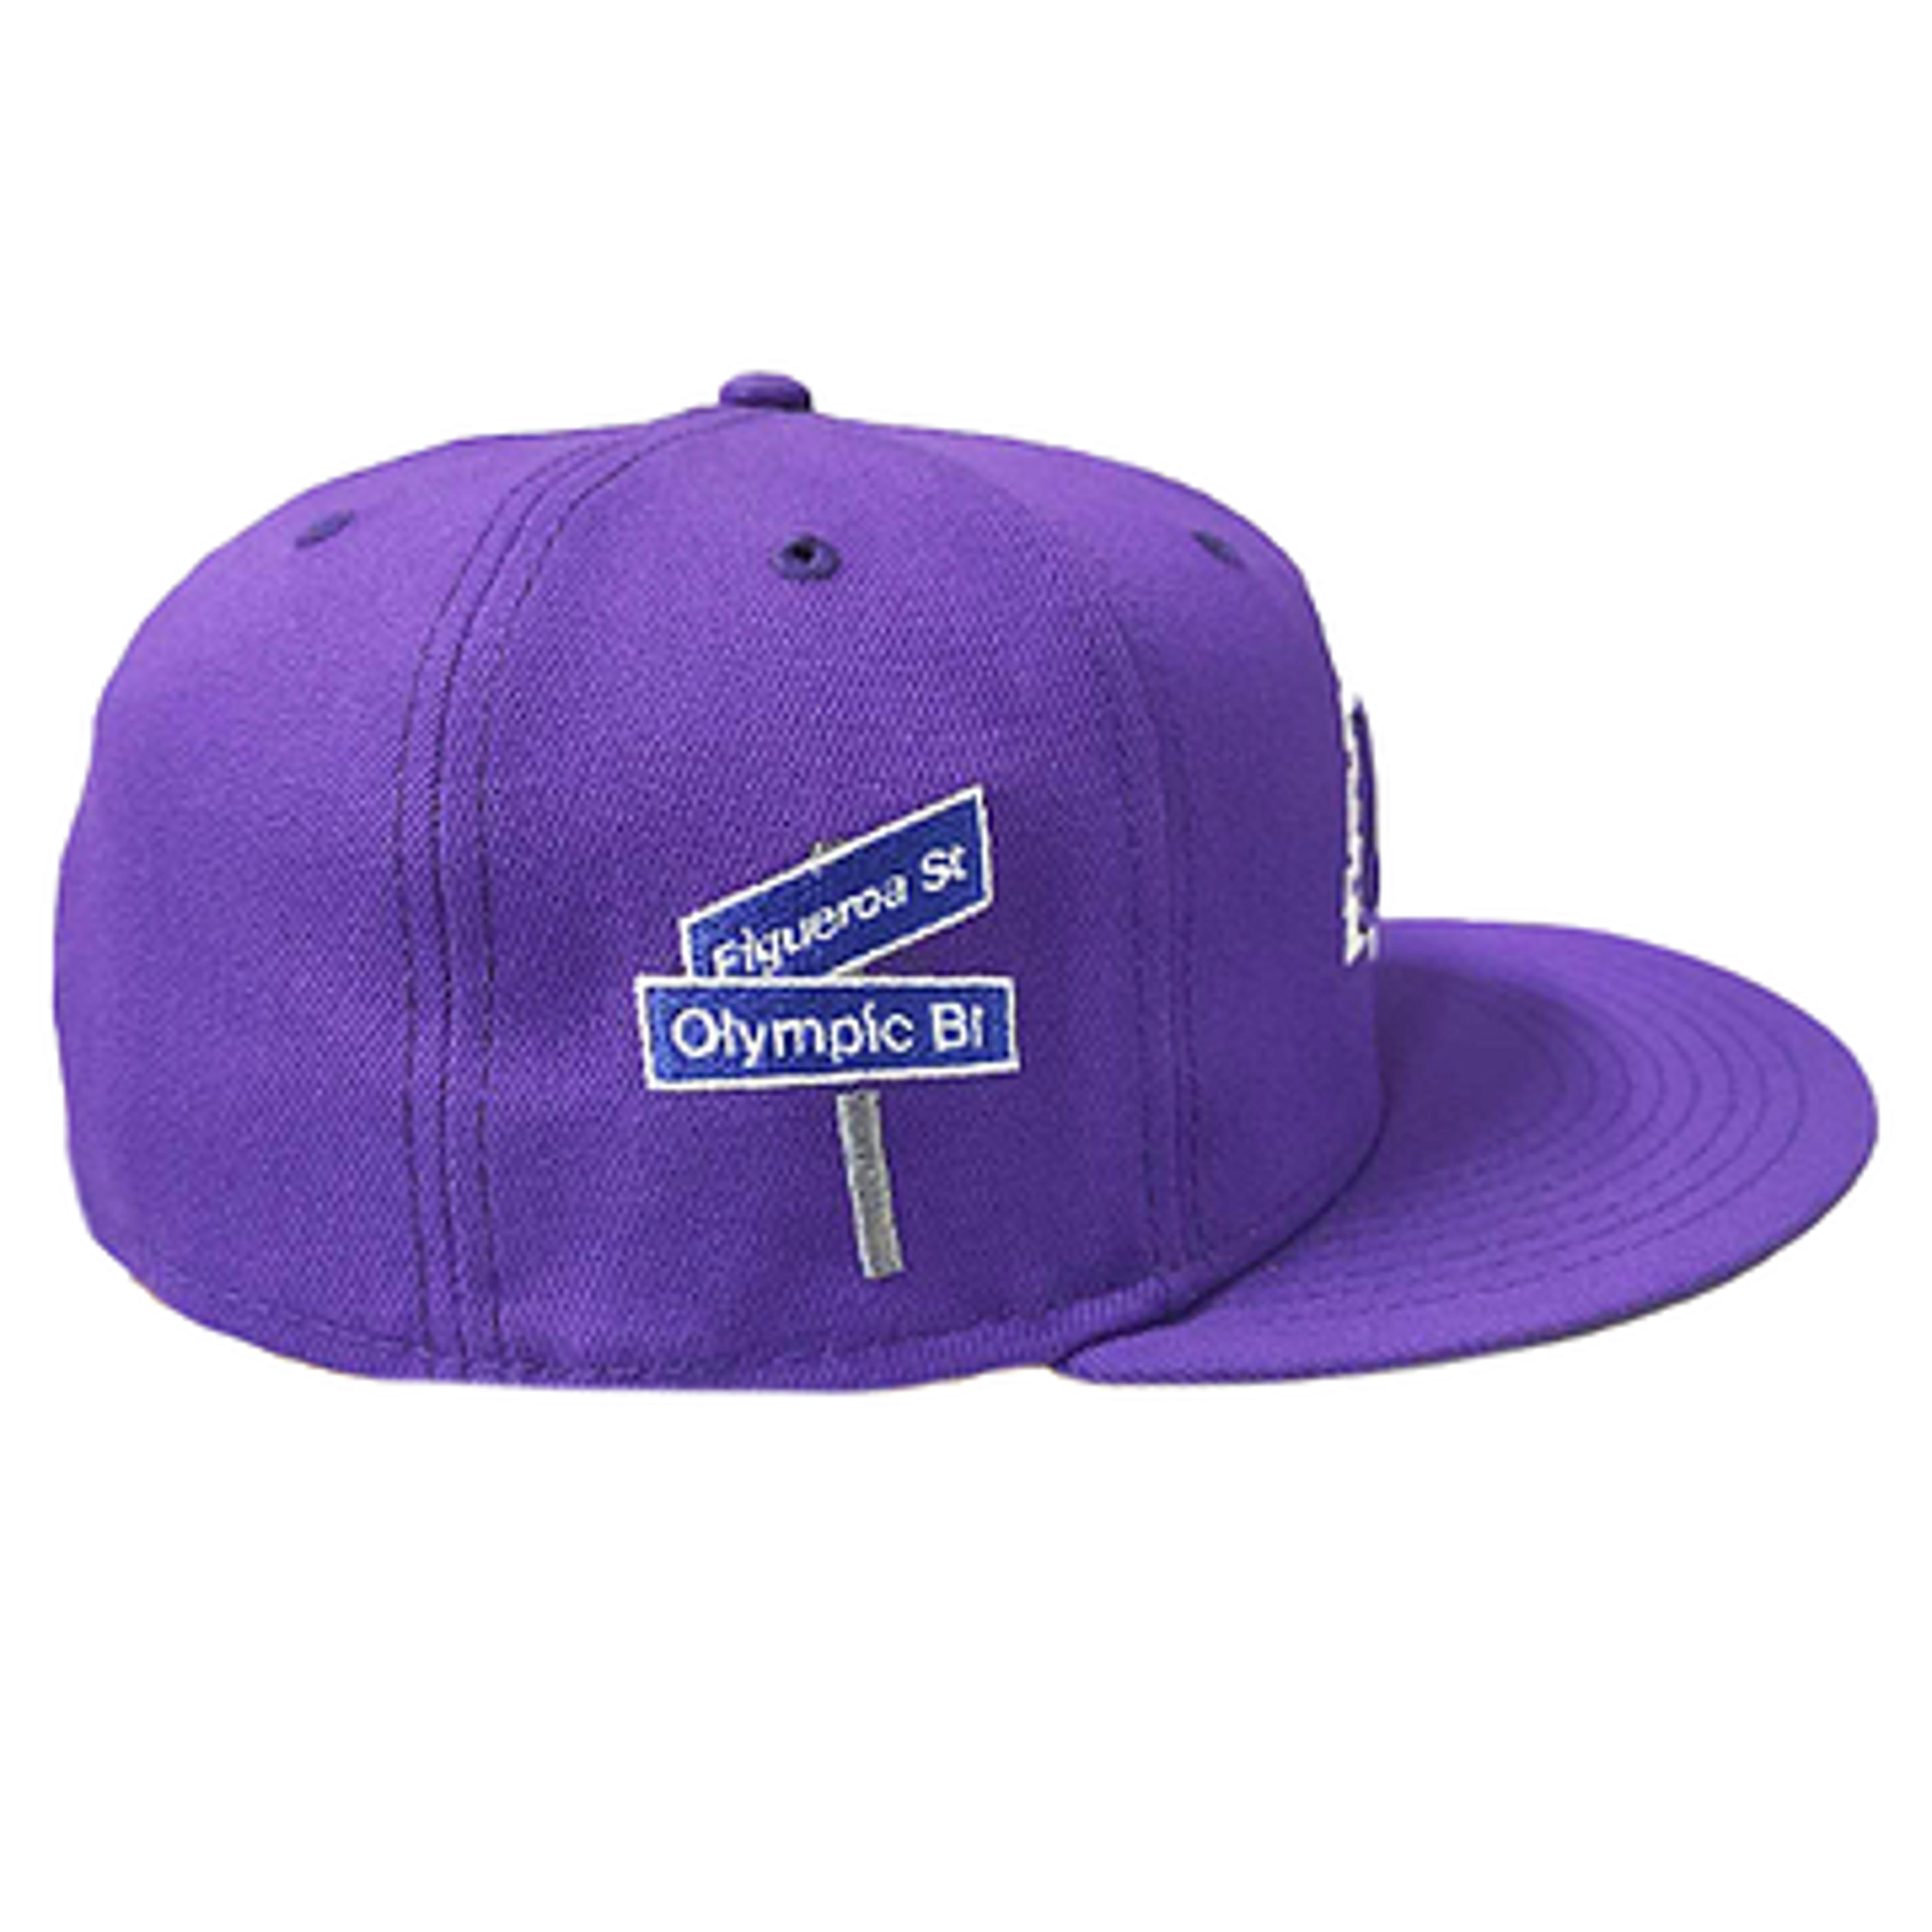 Alternate View 1 of Los Angeles Lakers - Ben Baller 59FIFTY True Purple